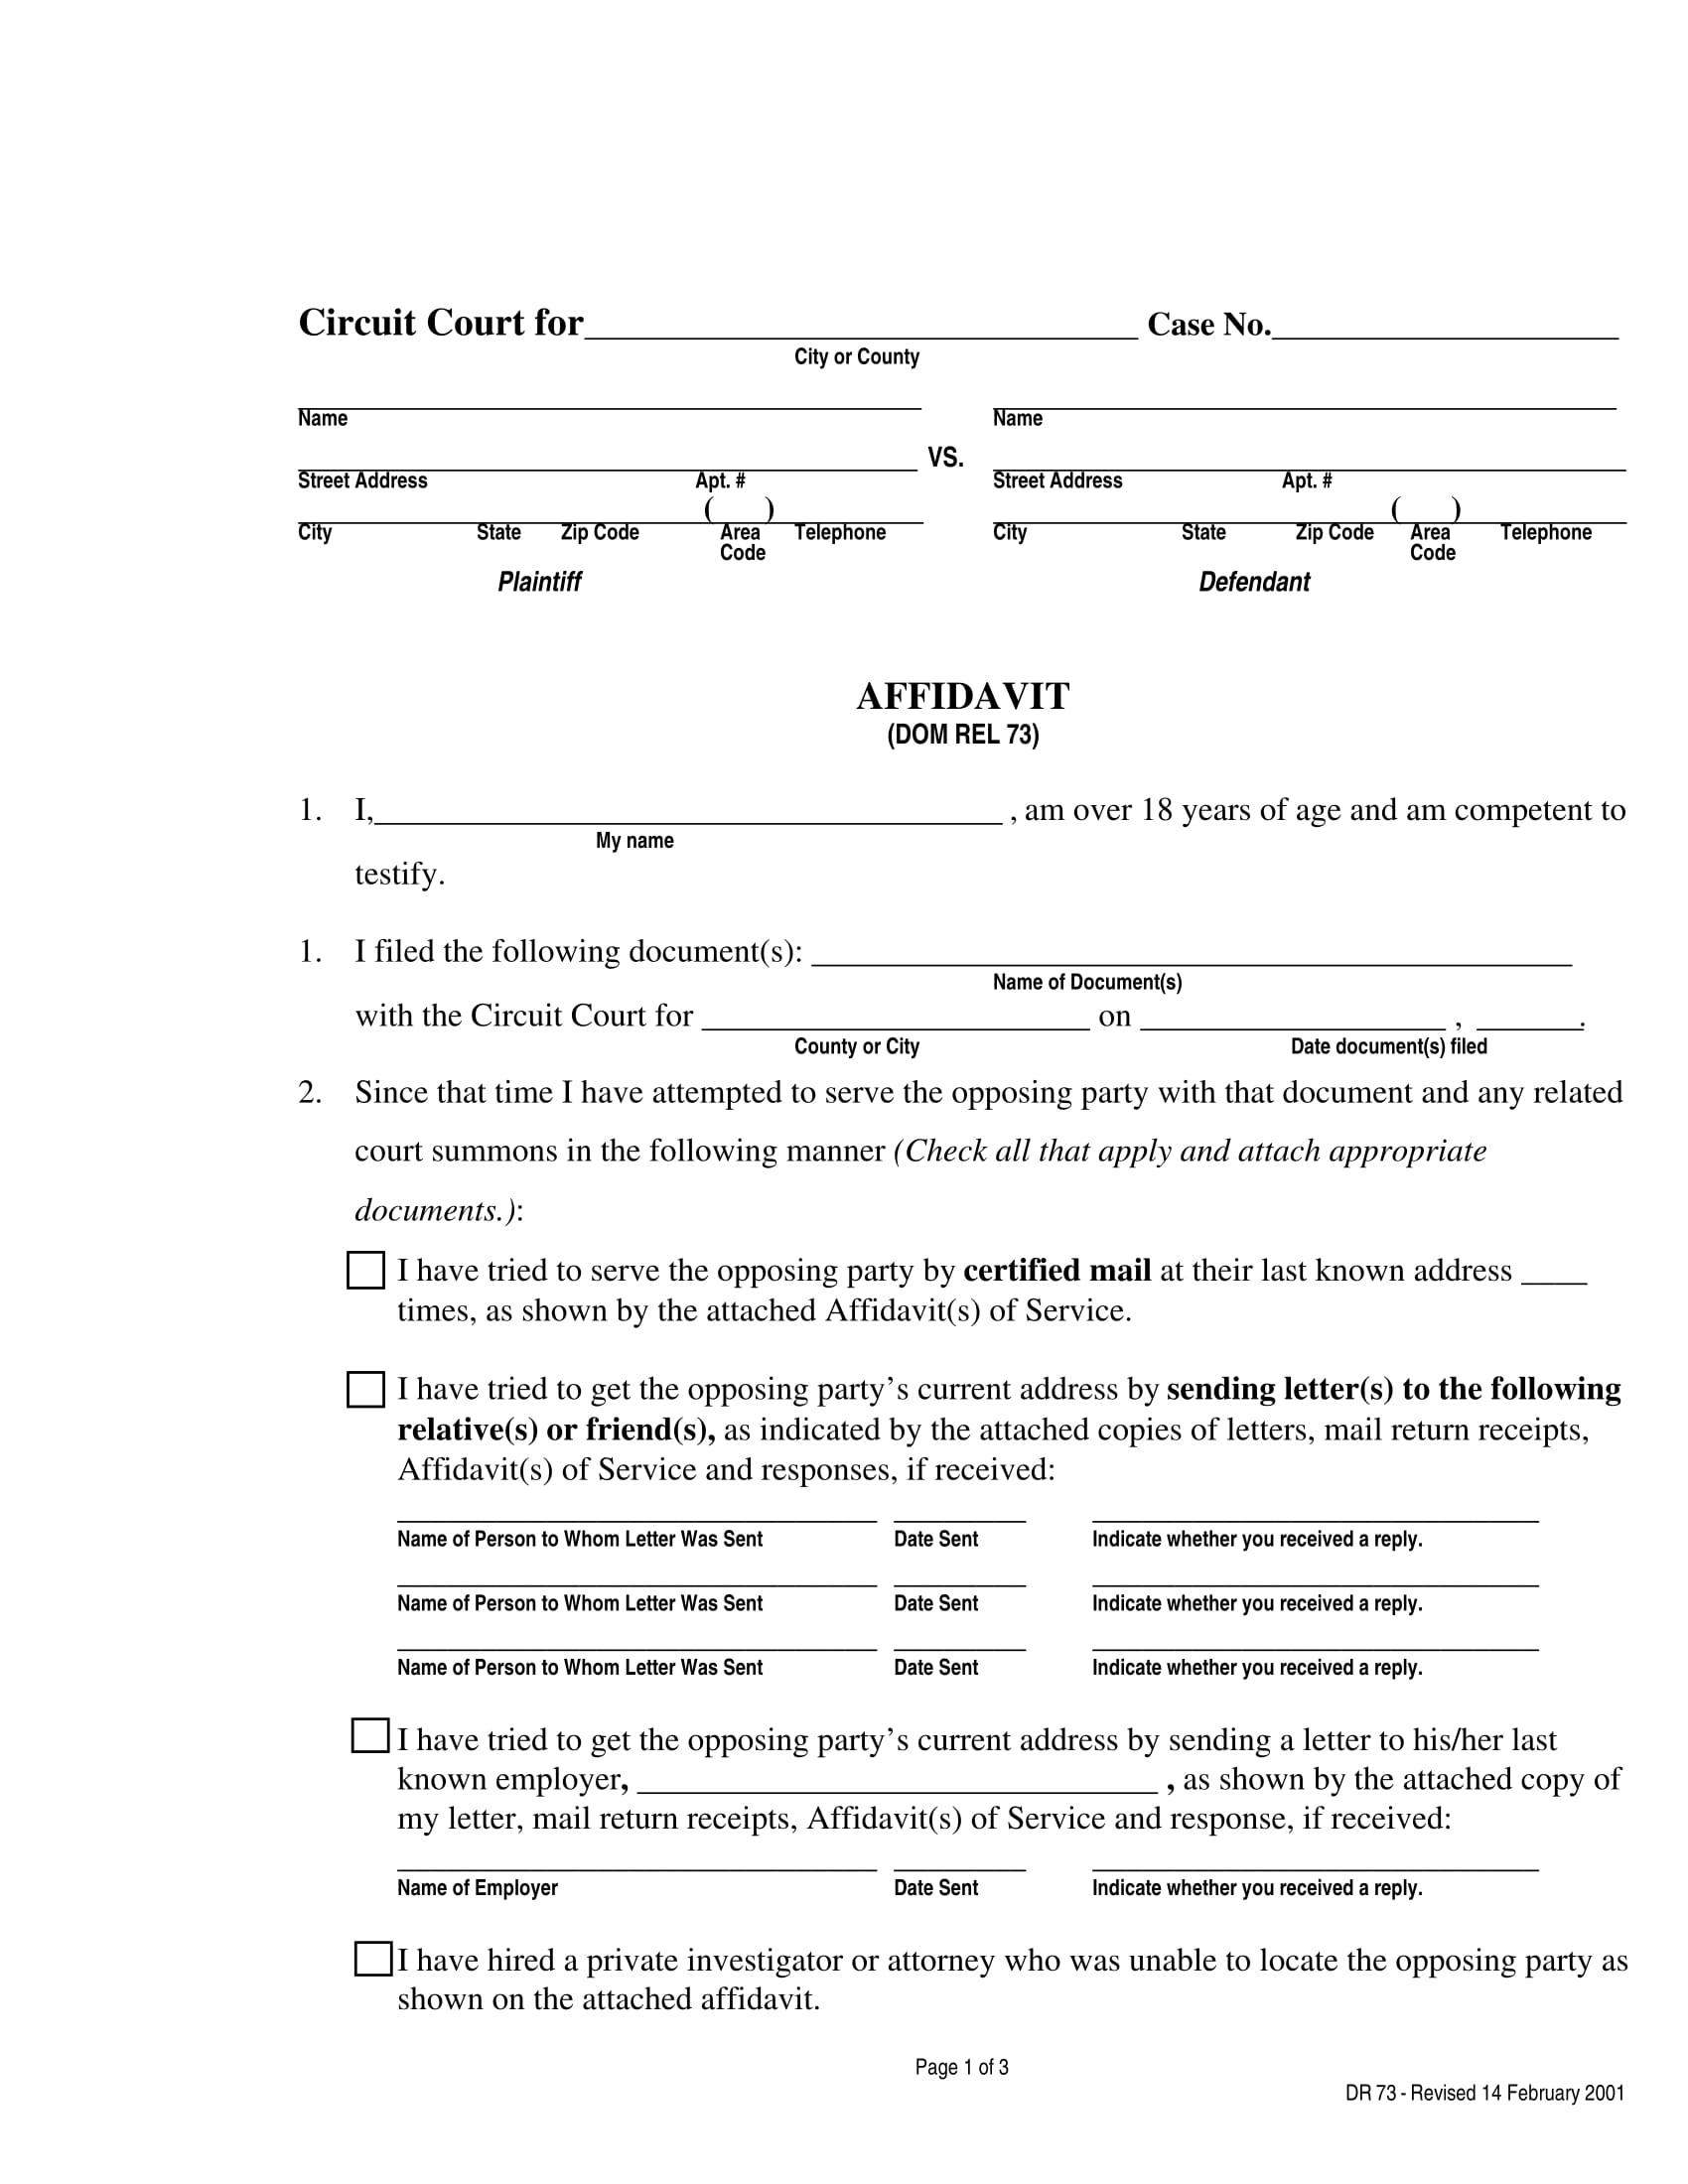 circuit court affidavit sample format 1